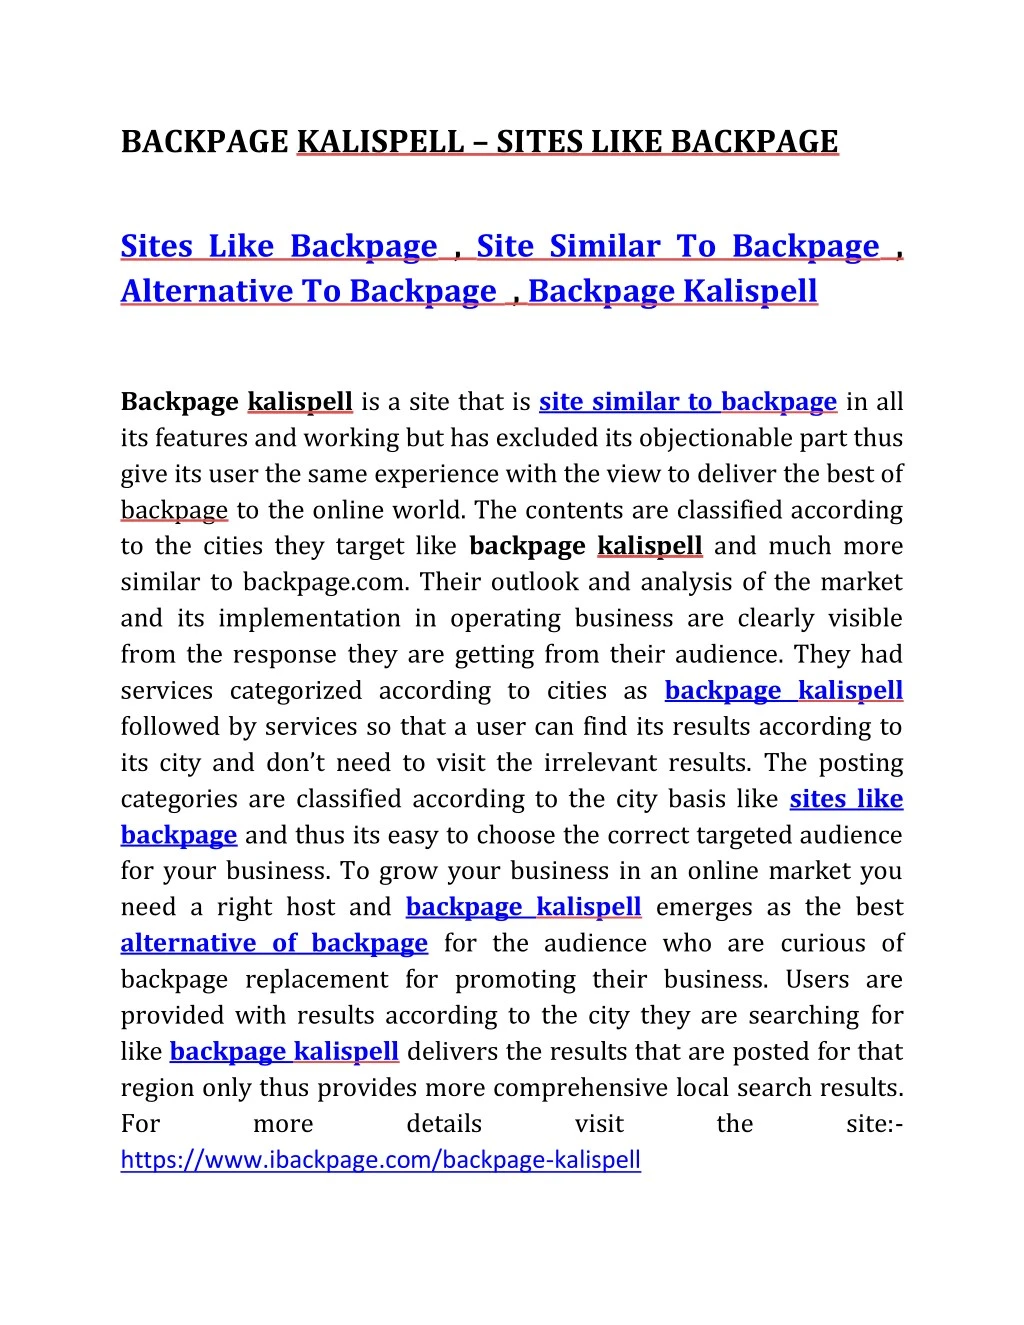 backpage kalispell sites like backpage